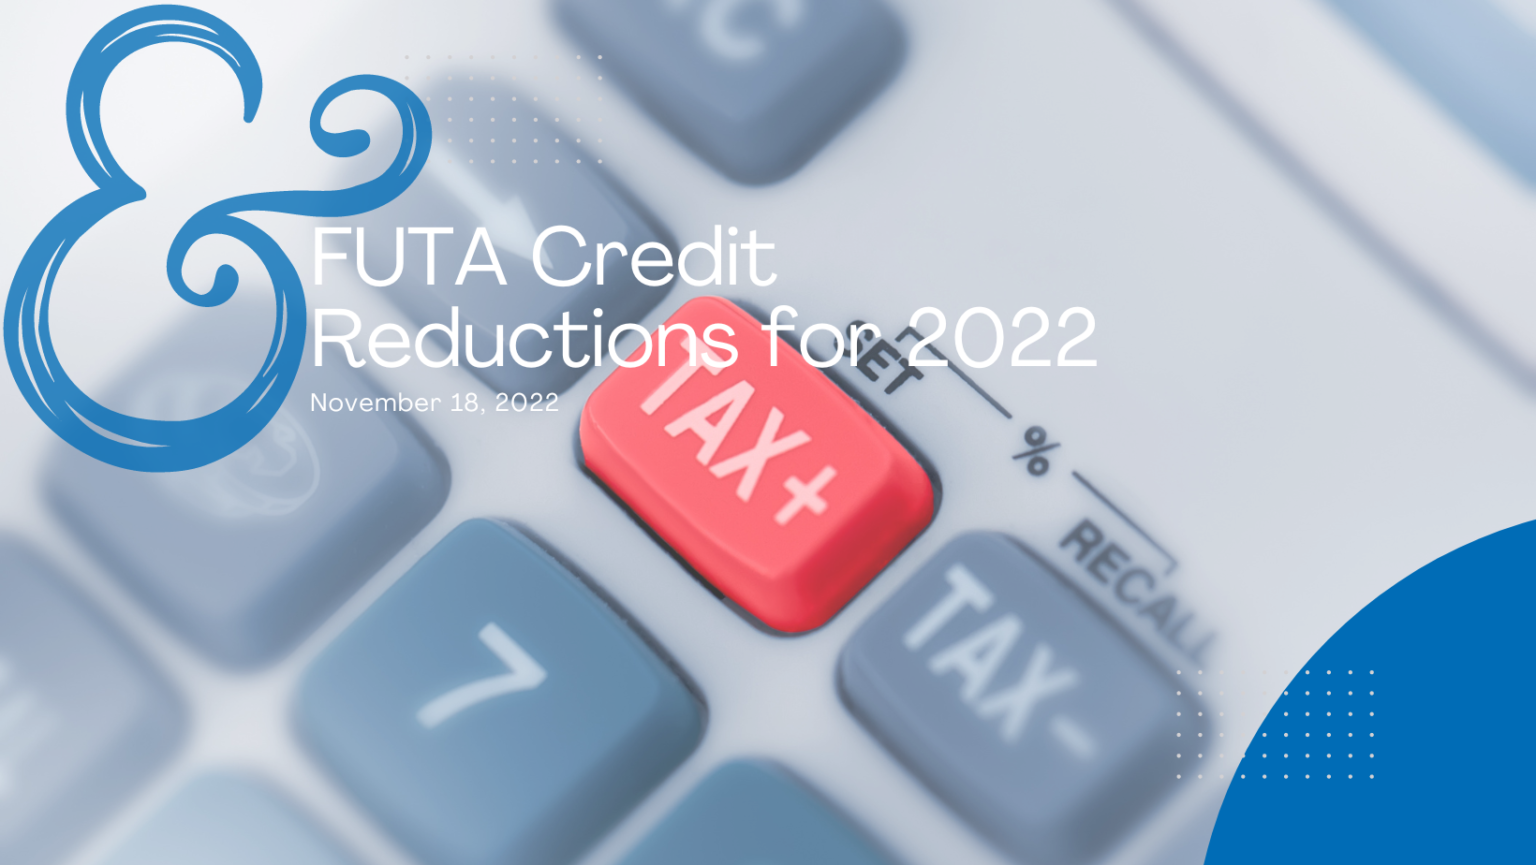 futa-tax-reductions-for-2022-thomas-company